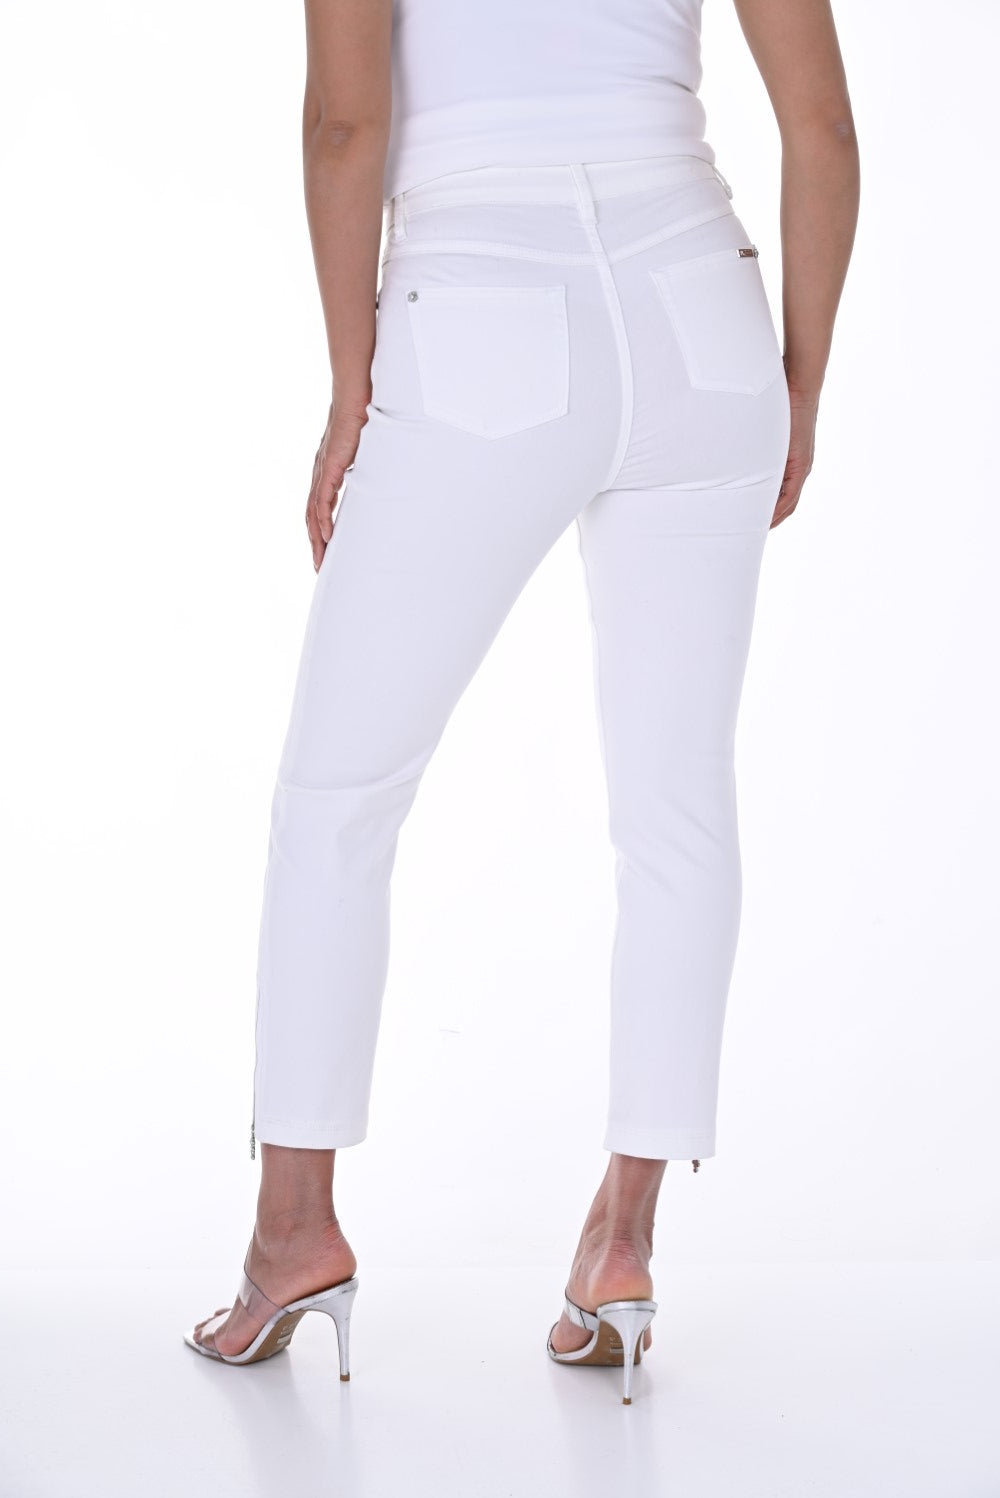 Frank Lyman Jeans 246253U Off-White